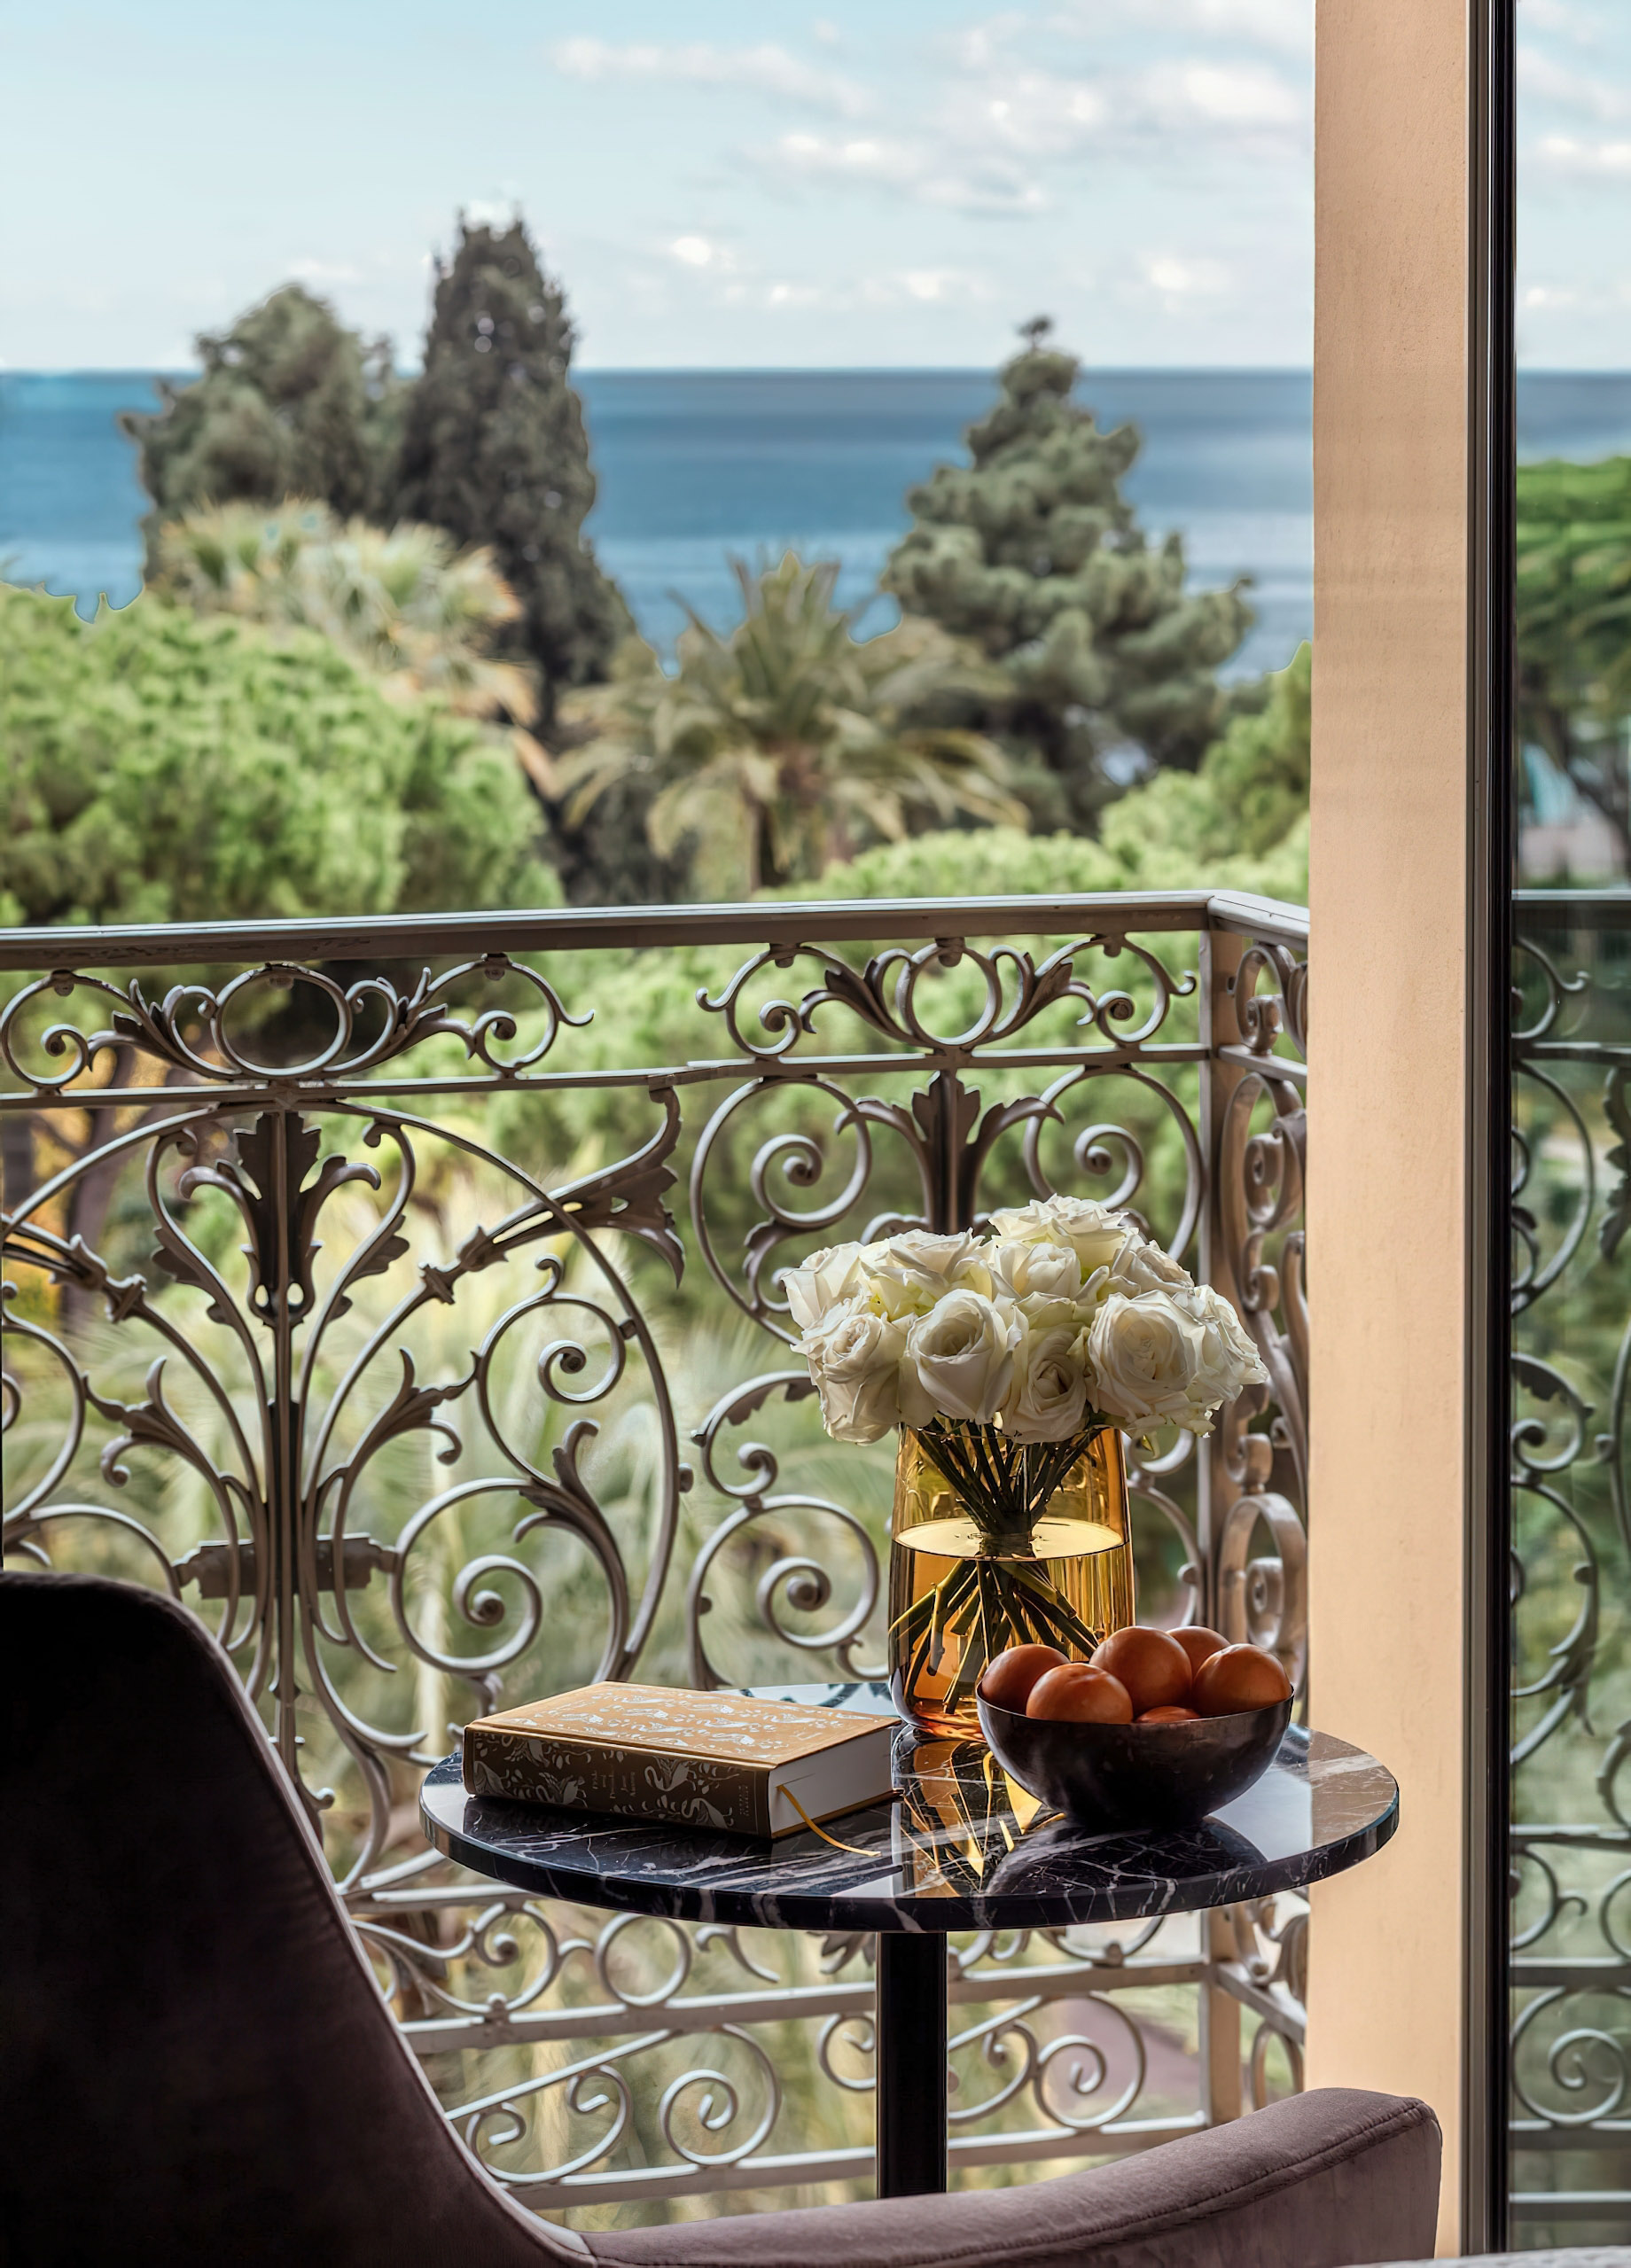 Anantara Plaza Nice Hotel – Nice, France – Guest Room Balcony View